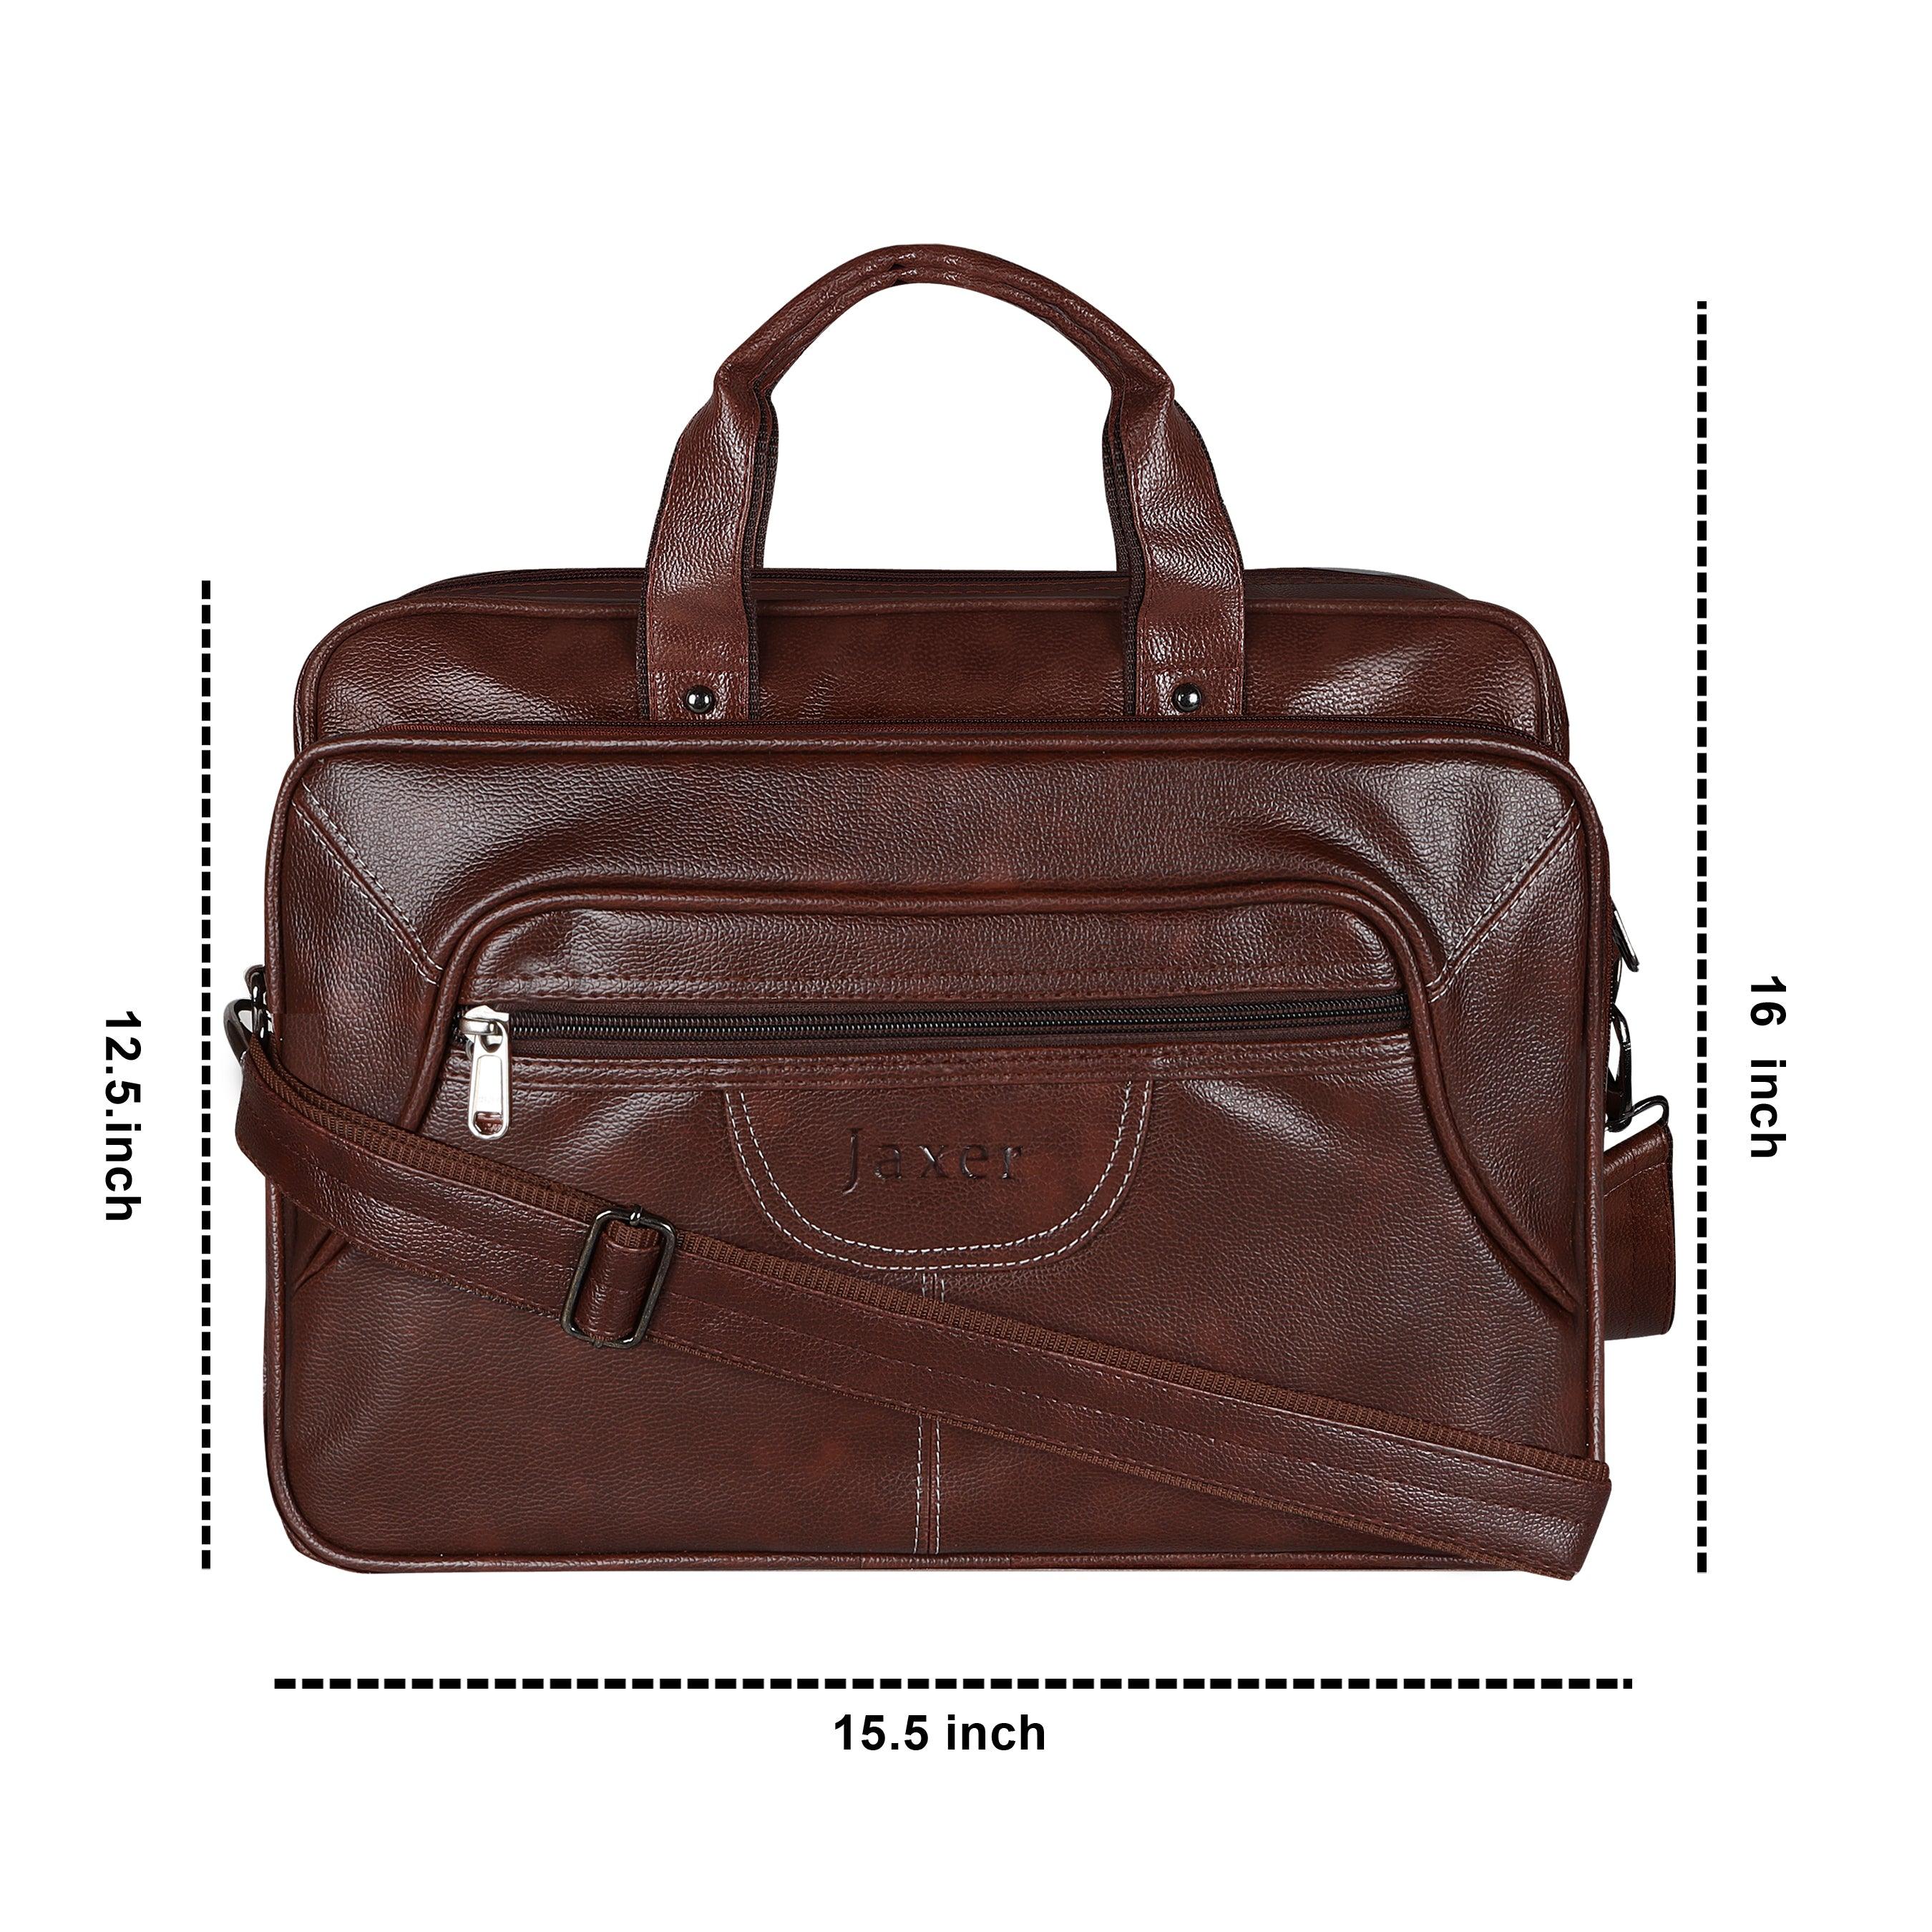 Jaxer Brown Leather Laptop Messenger Bag for Men - JXRMB009 - Jainx Store